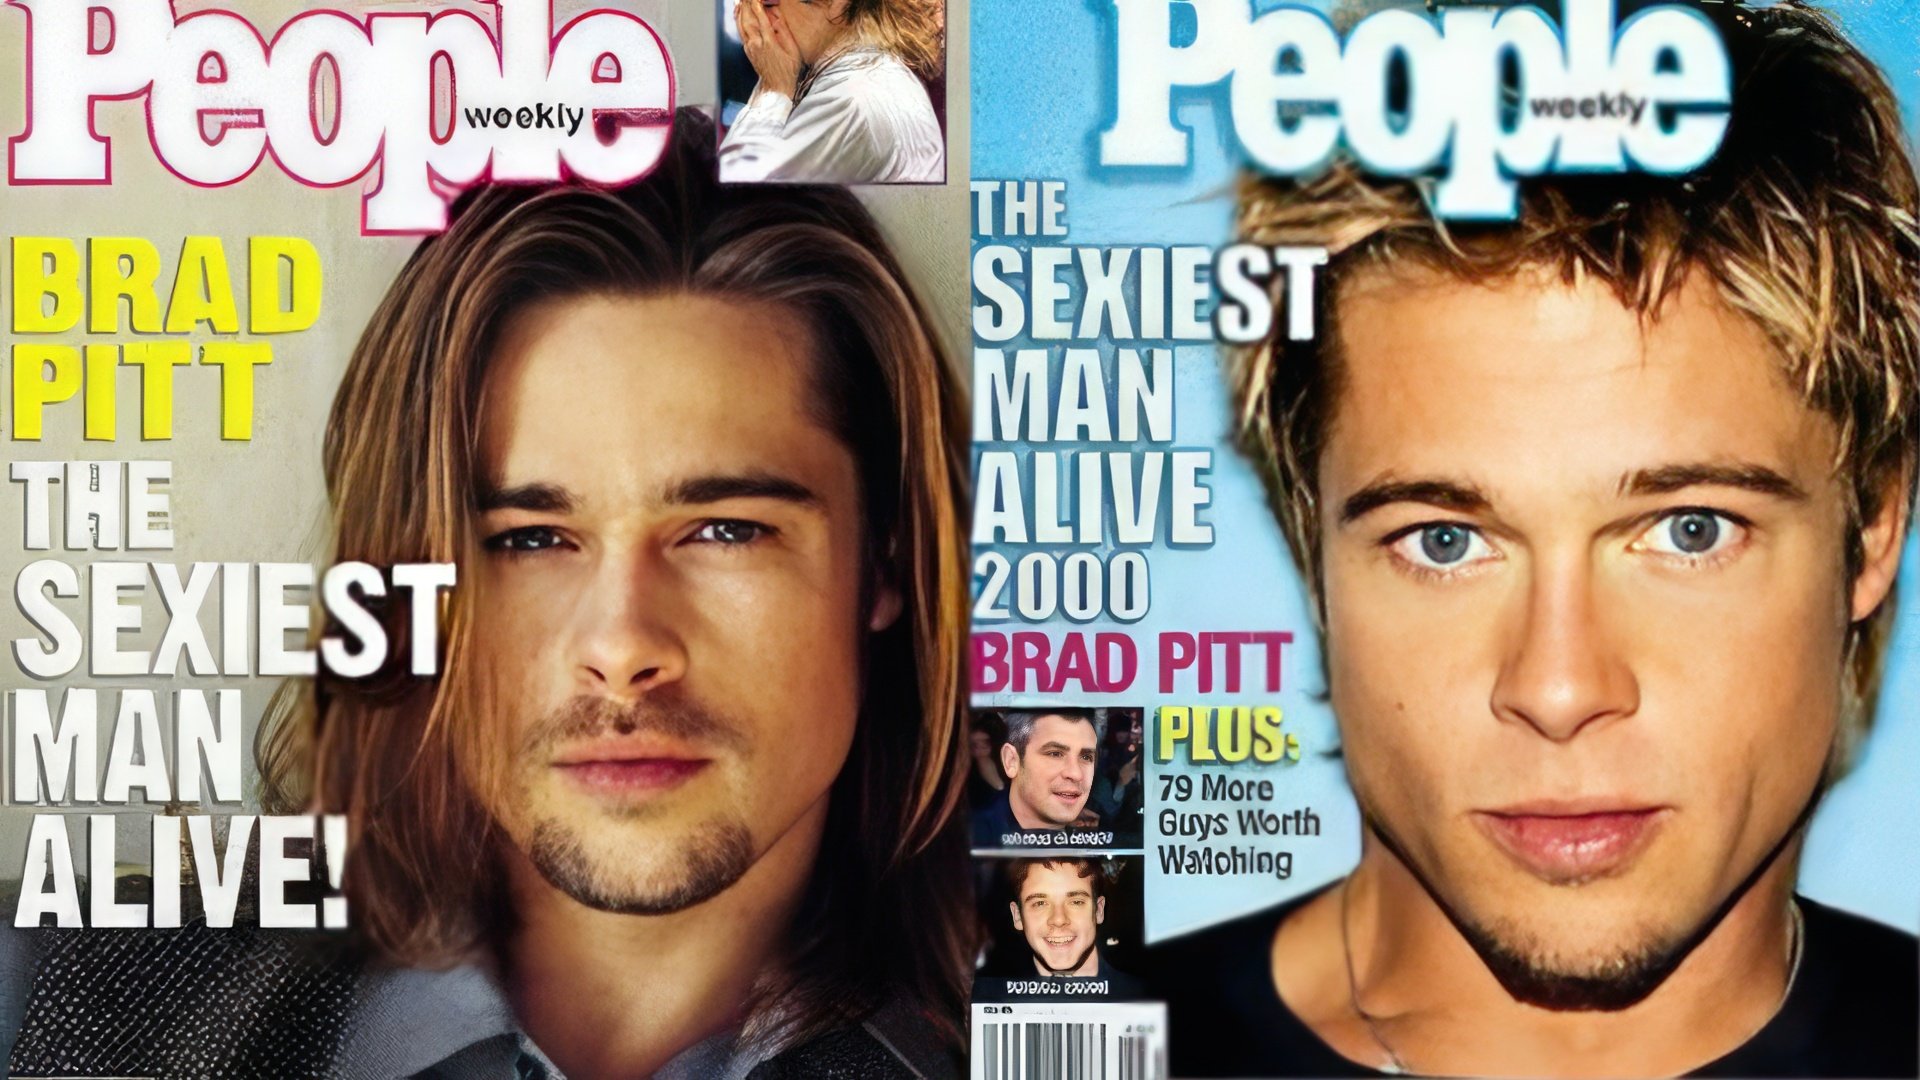 Twice the sexiest man on Earth – Brad Pitt